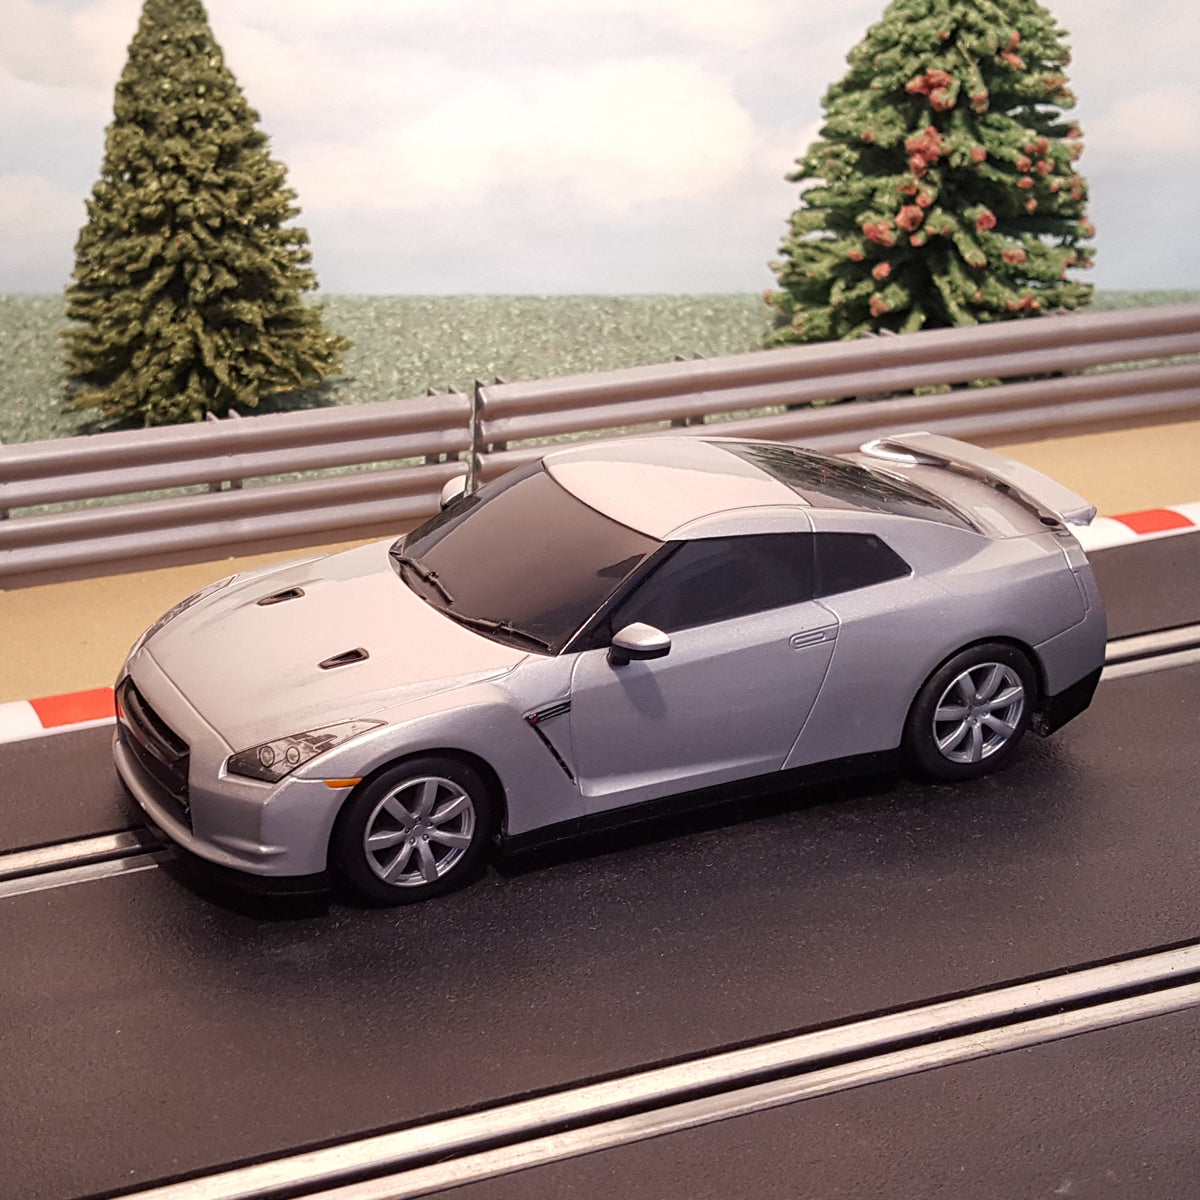 Scalextric 1:32 Drift Car - Silver Nissan GT-R